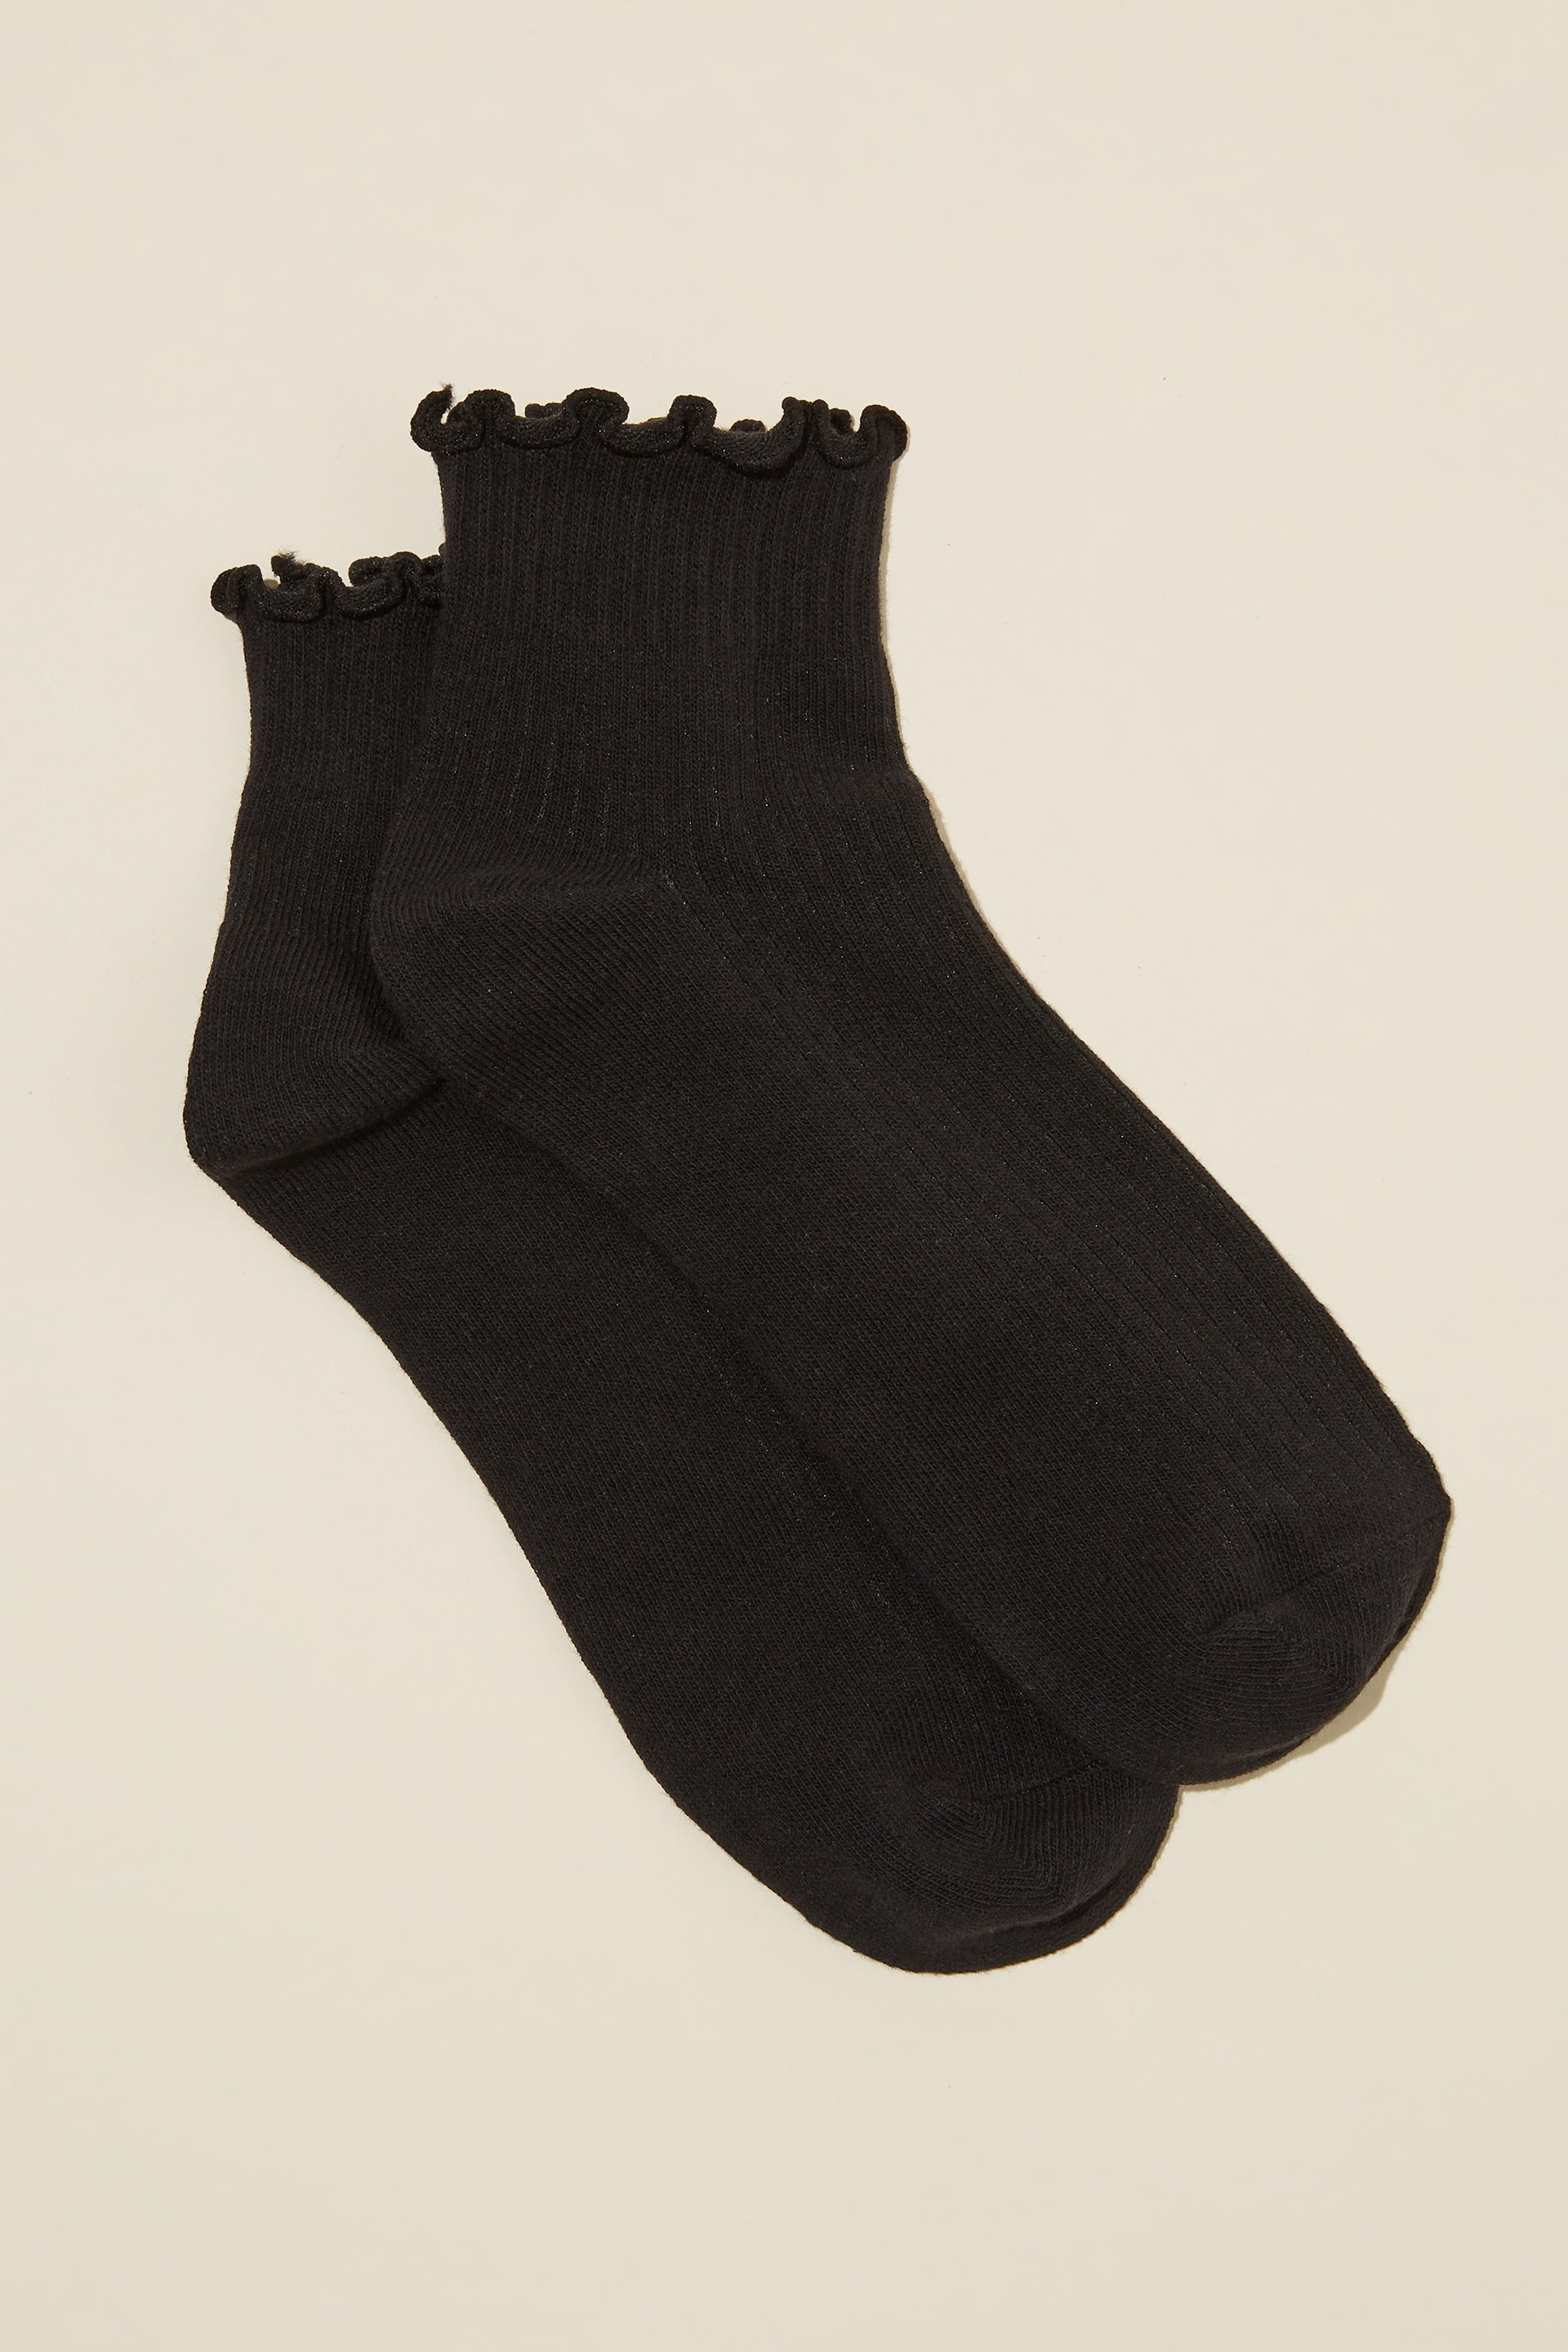 Rubi - Frill Ribbed Ankle Sock - Black